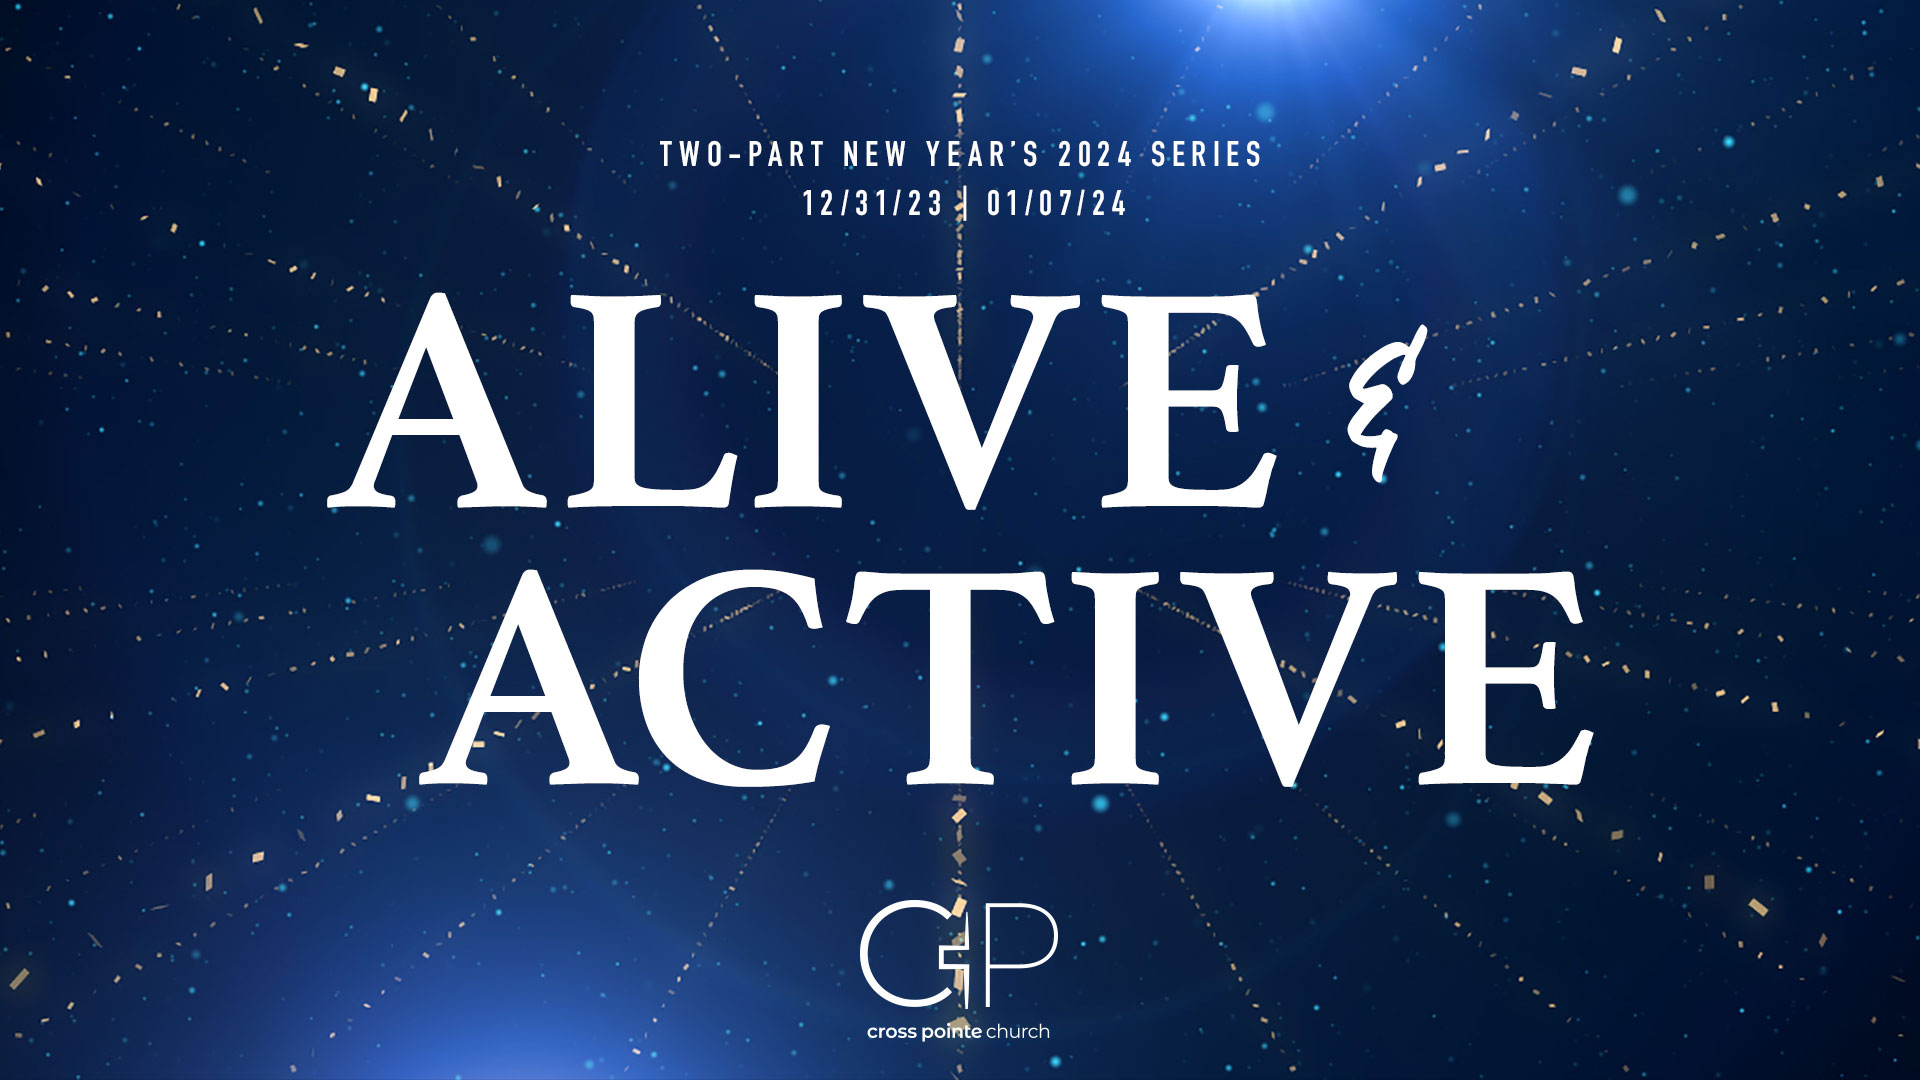 Alive & Active